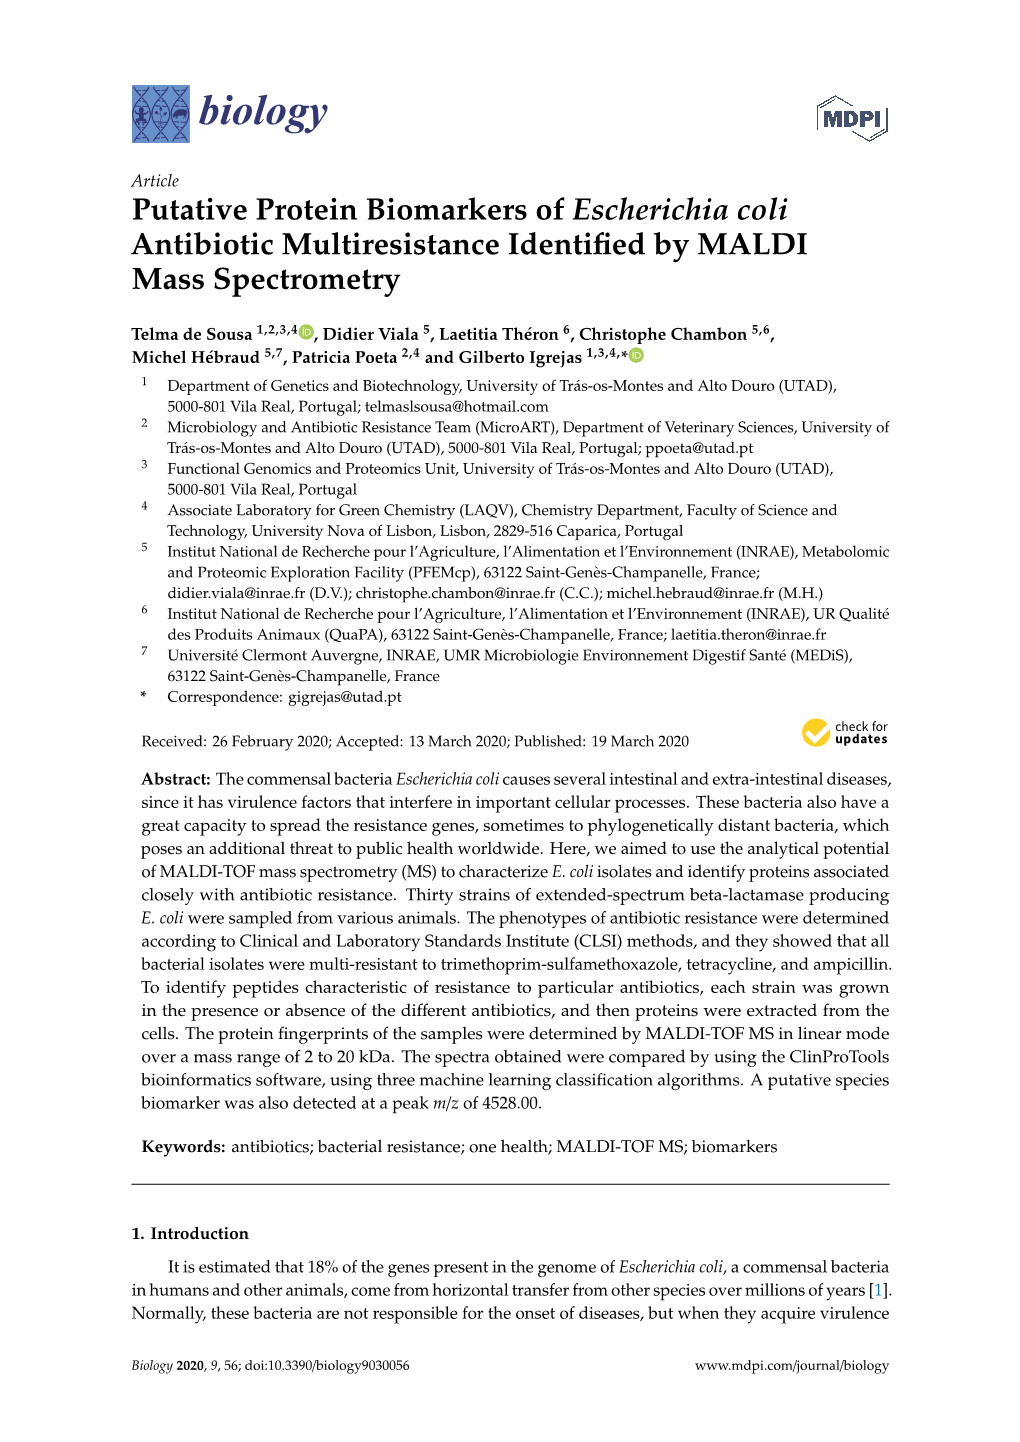 Putative Protein Biomarkers of Escherichia Coli Antibiotic Multiresistance Identiﬁed by MALDI Mass Spectrometry